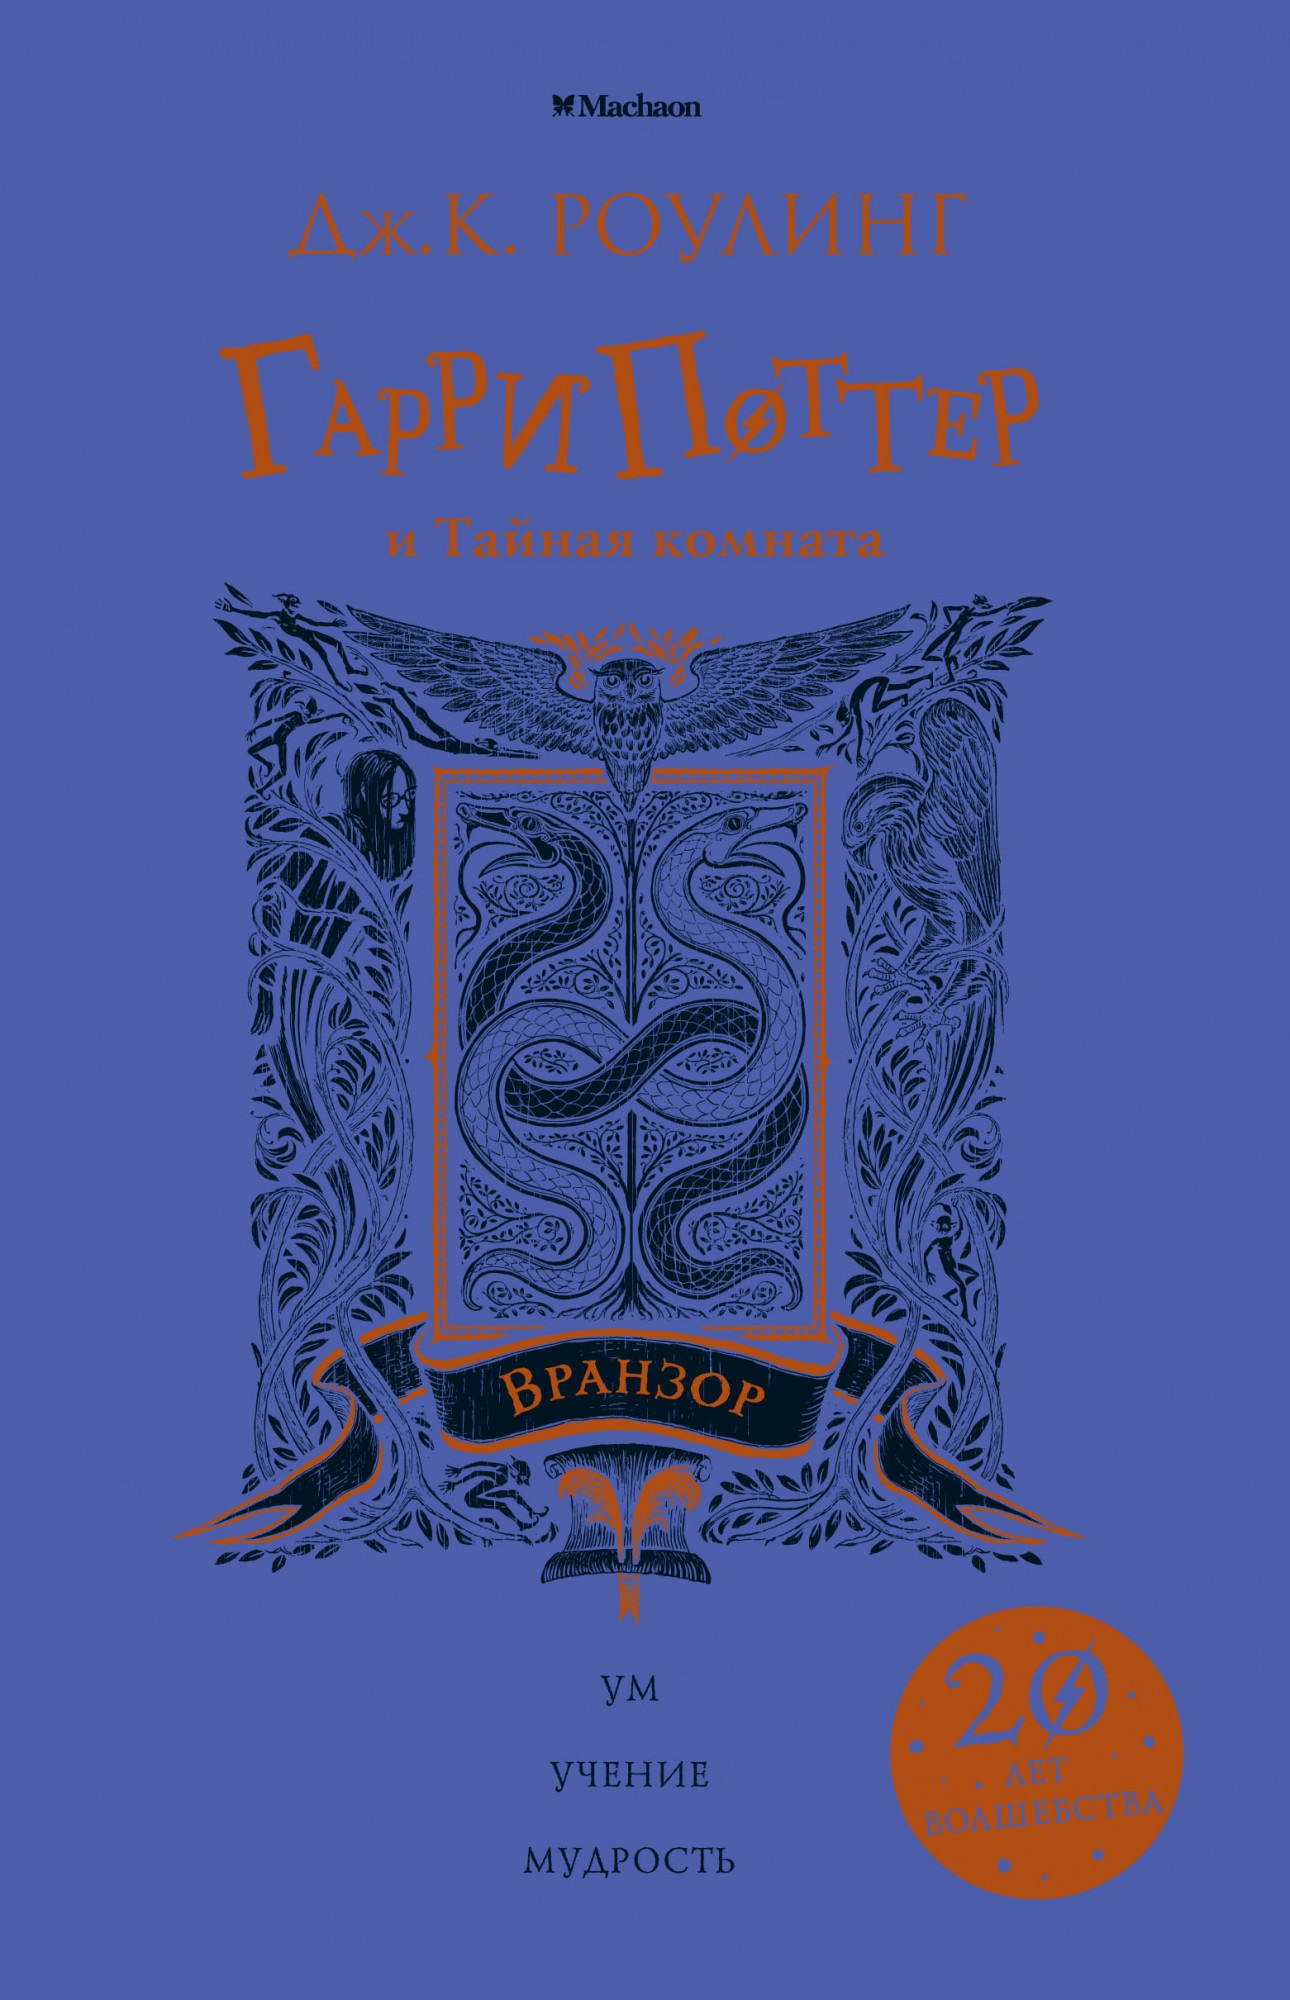 Book “Гарри Поттер и Тайная комната (Вранзор)” by Дж.К. Роулинг — 2018